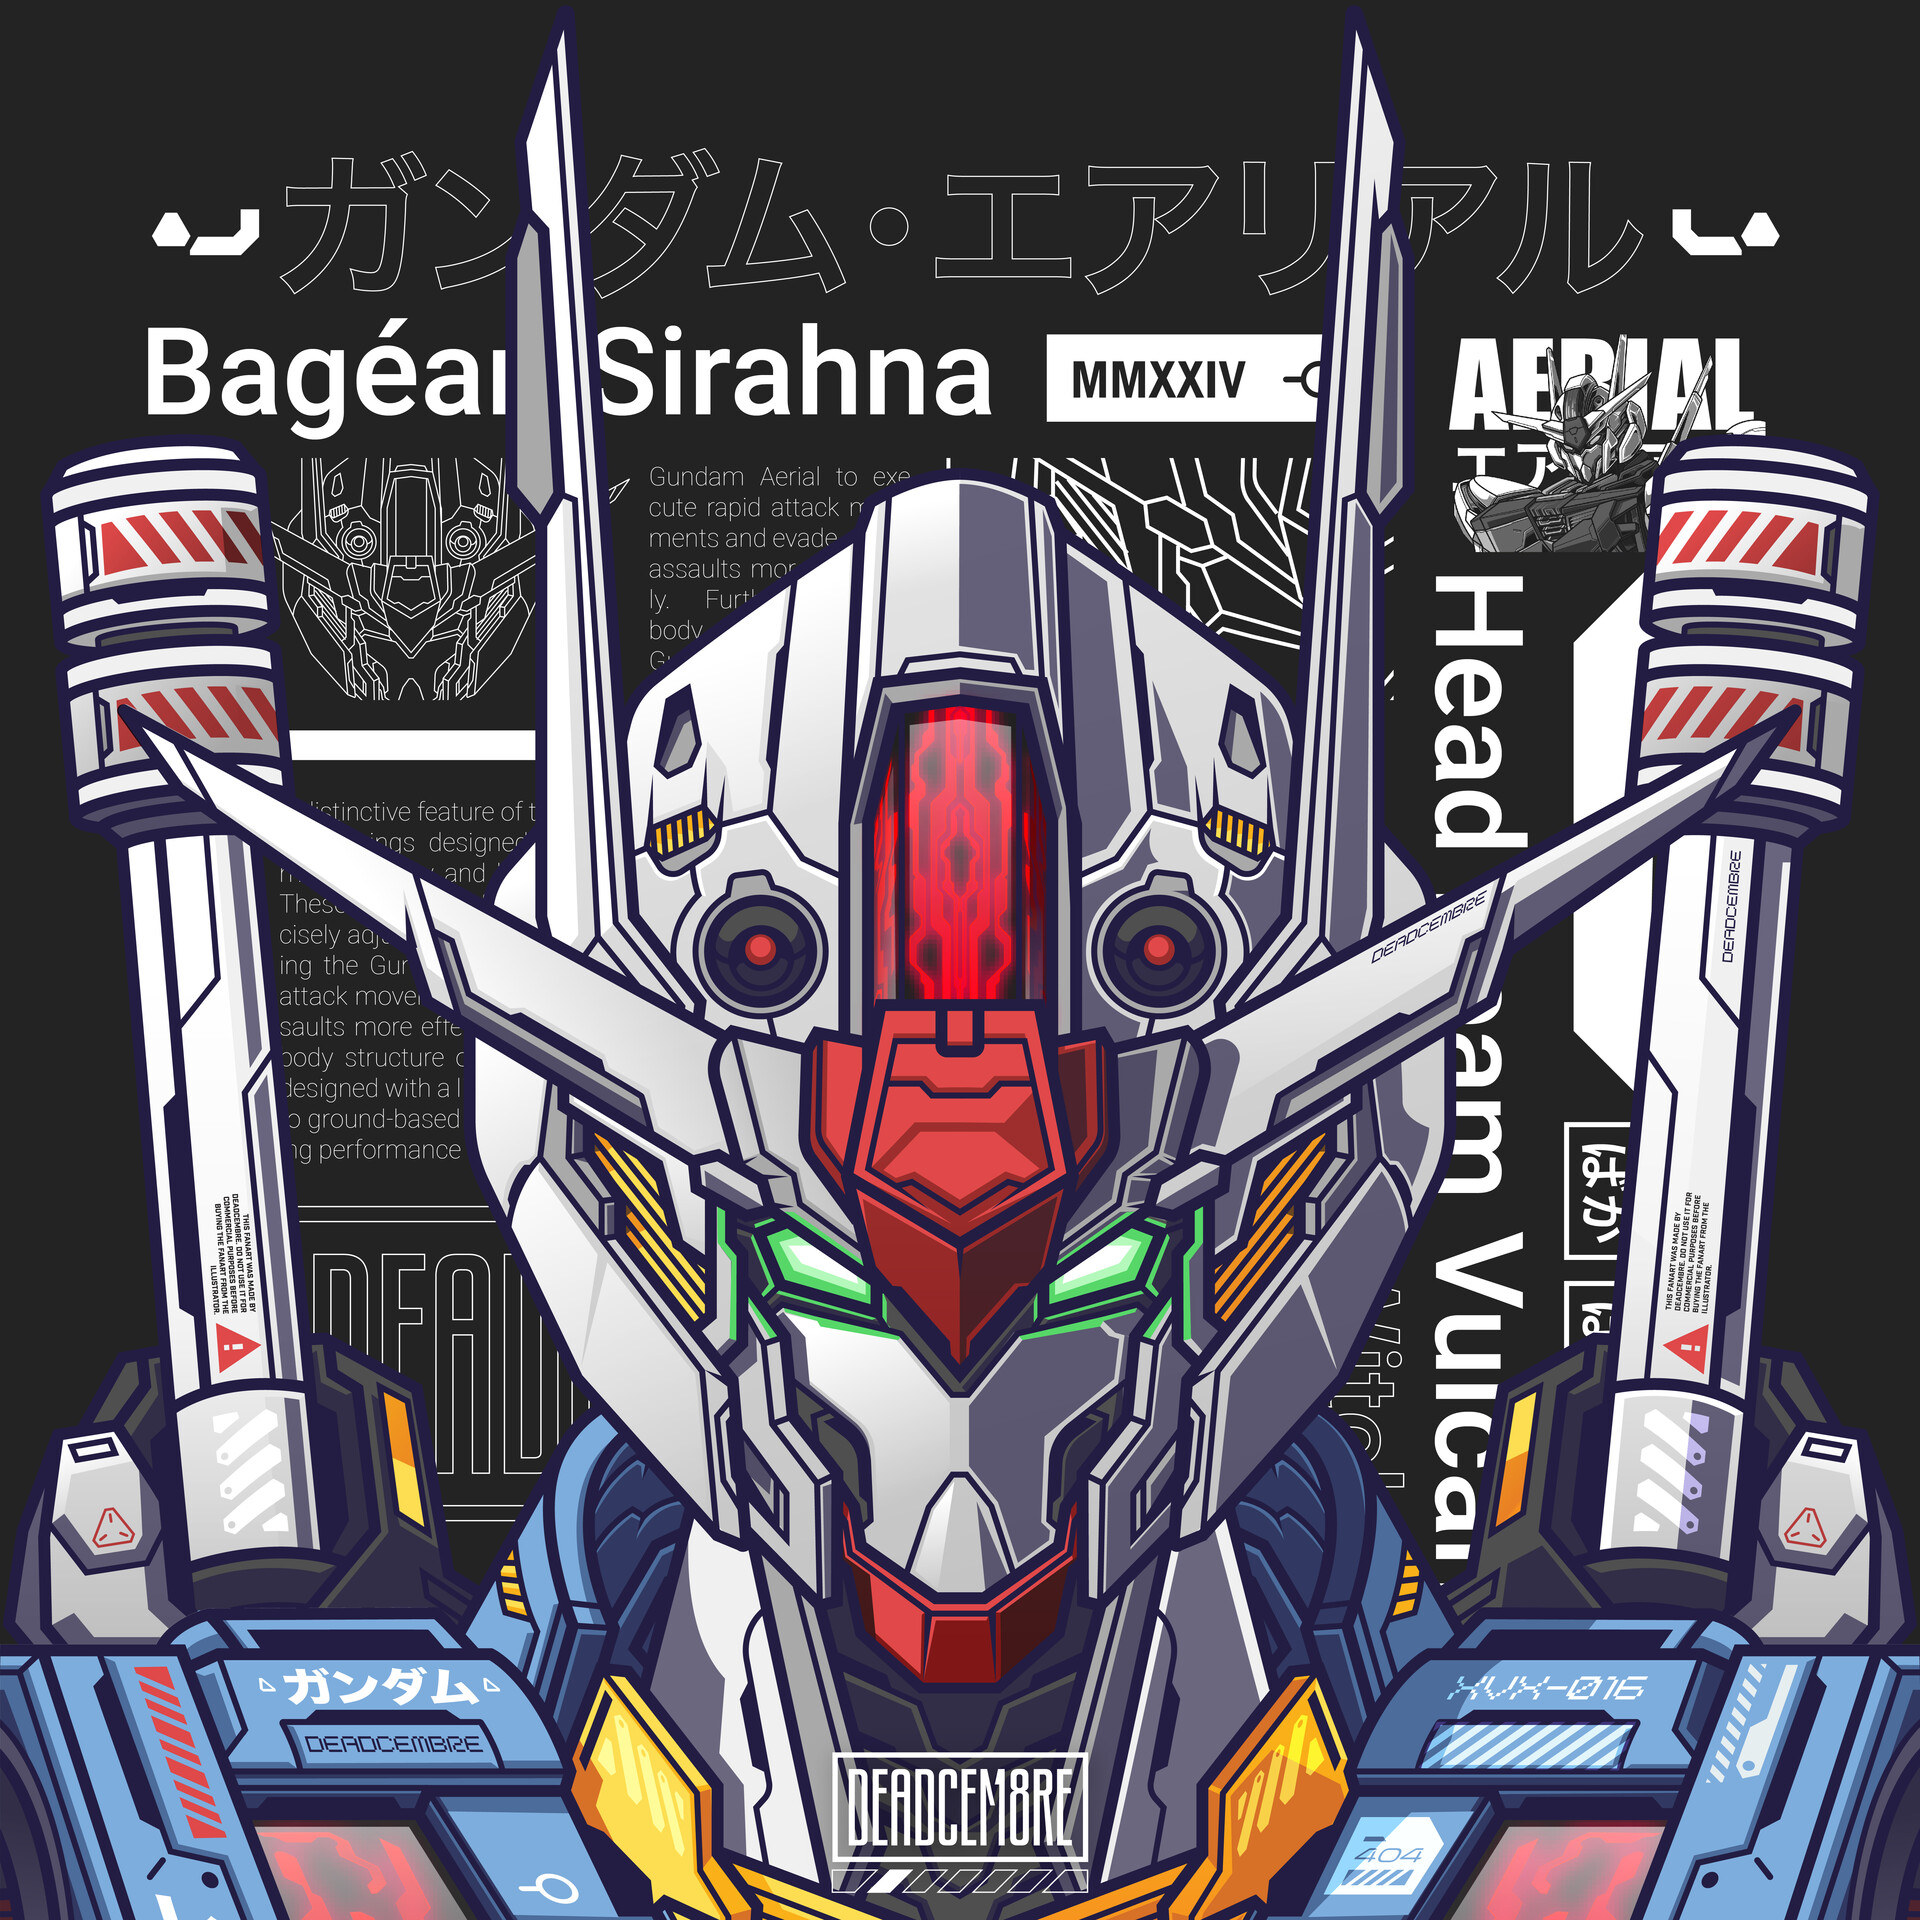 Gundam Aerial by specterL on Newgrounds